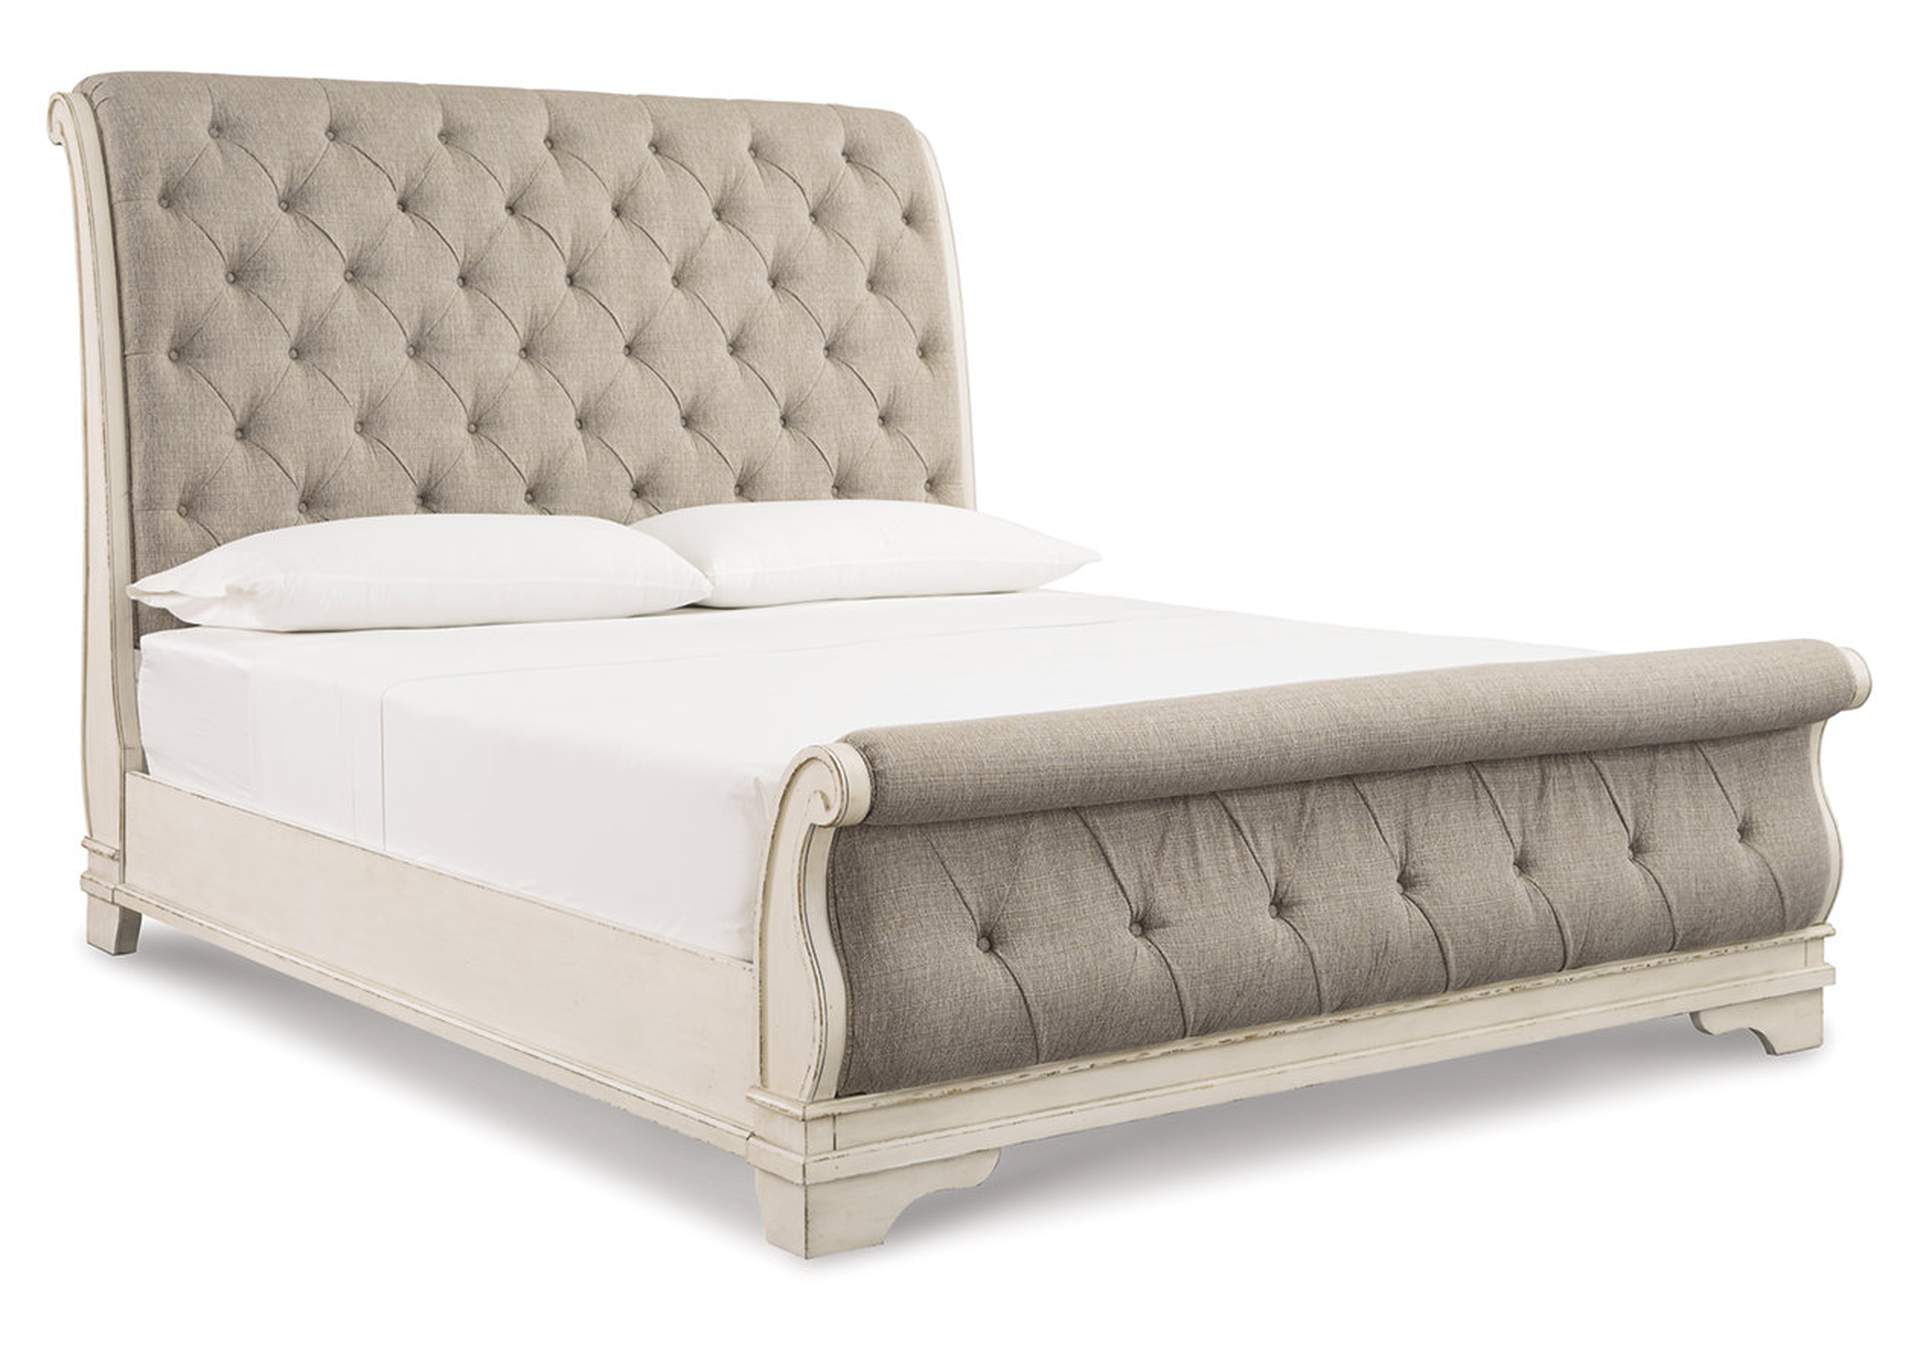 Realyn King Sleigh Bed Ashley Furniture, Heathridge King Sleigh Bed